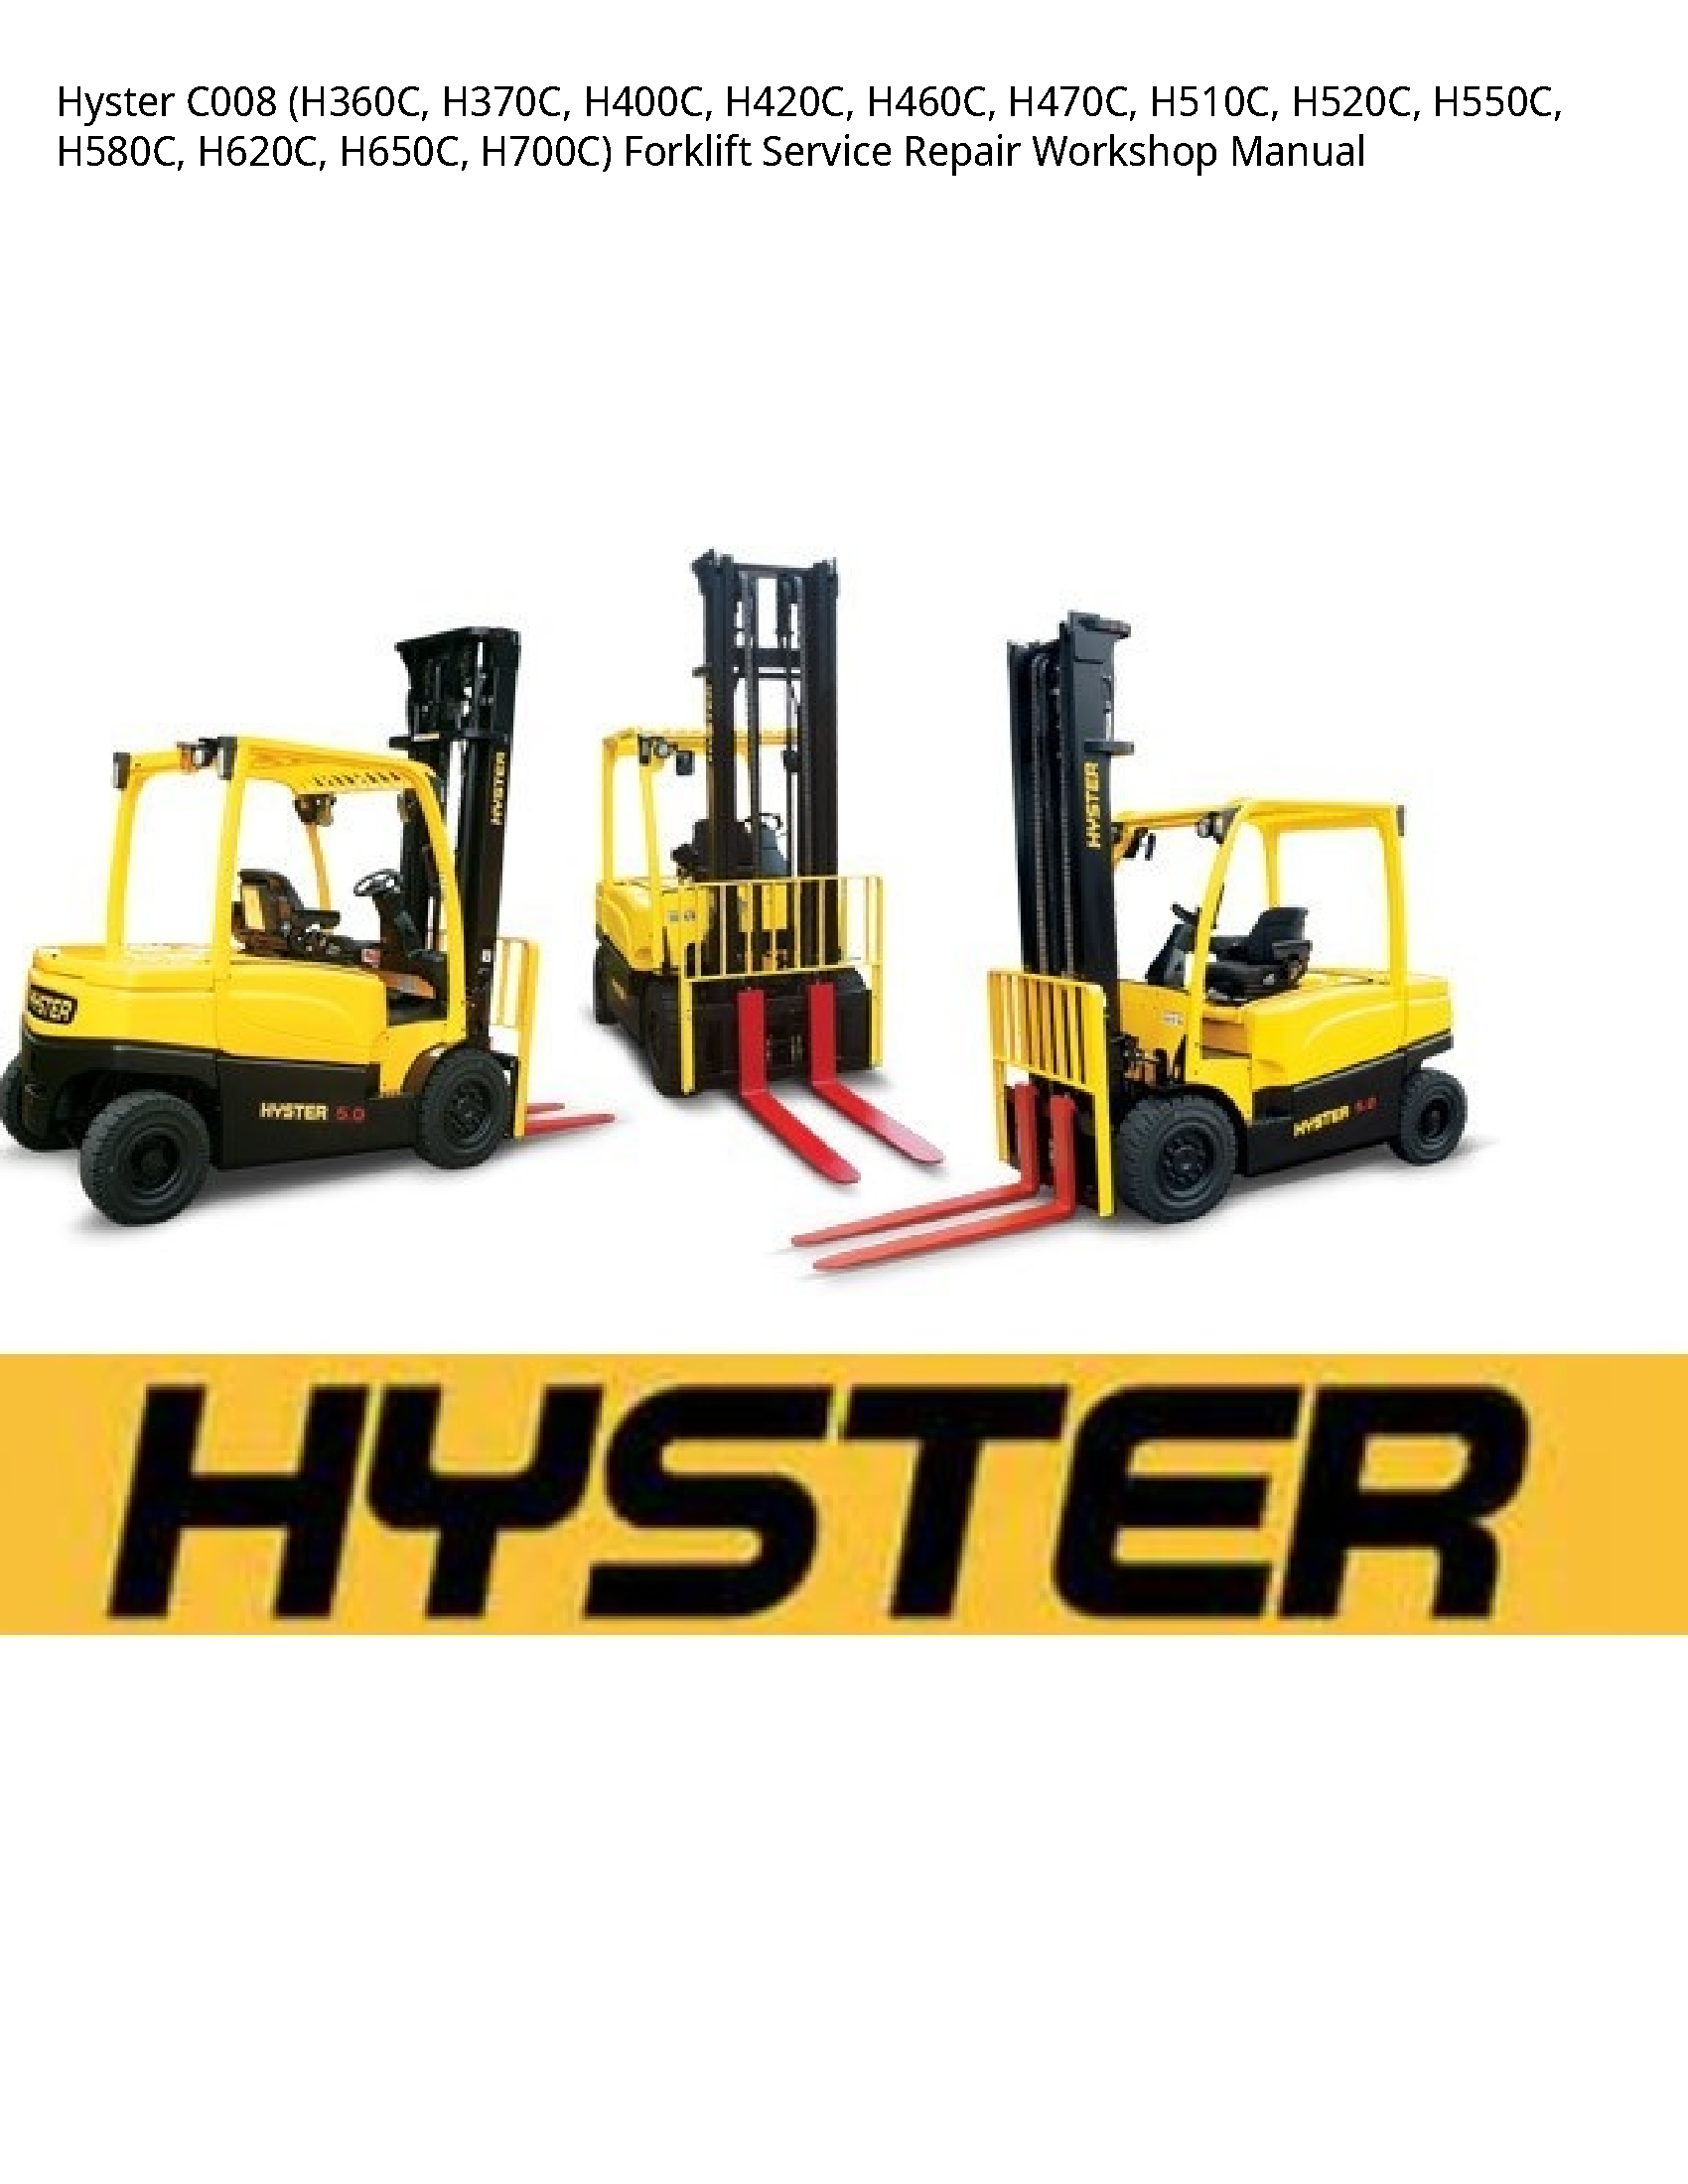 Hyster C008 Forklift manual